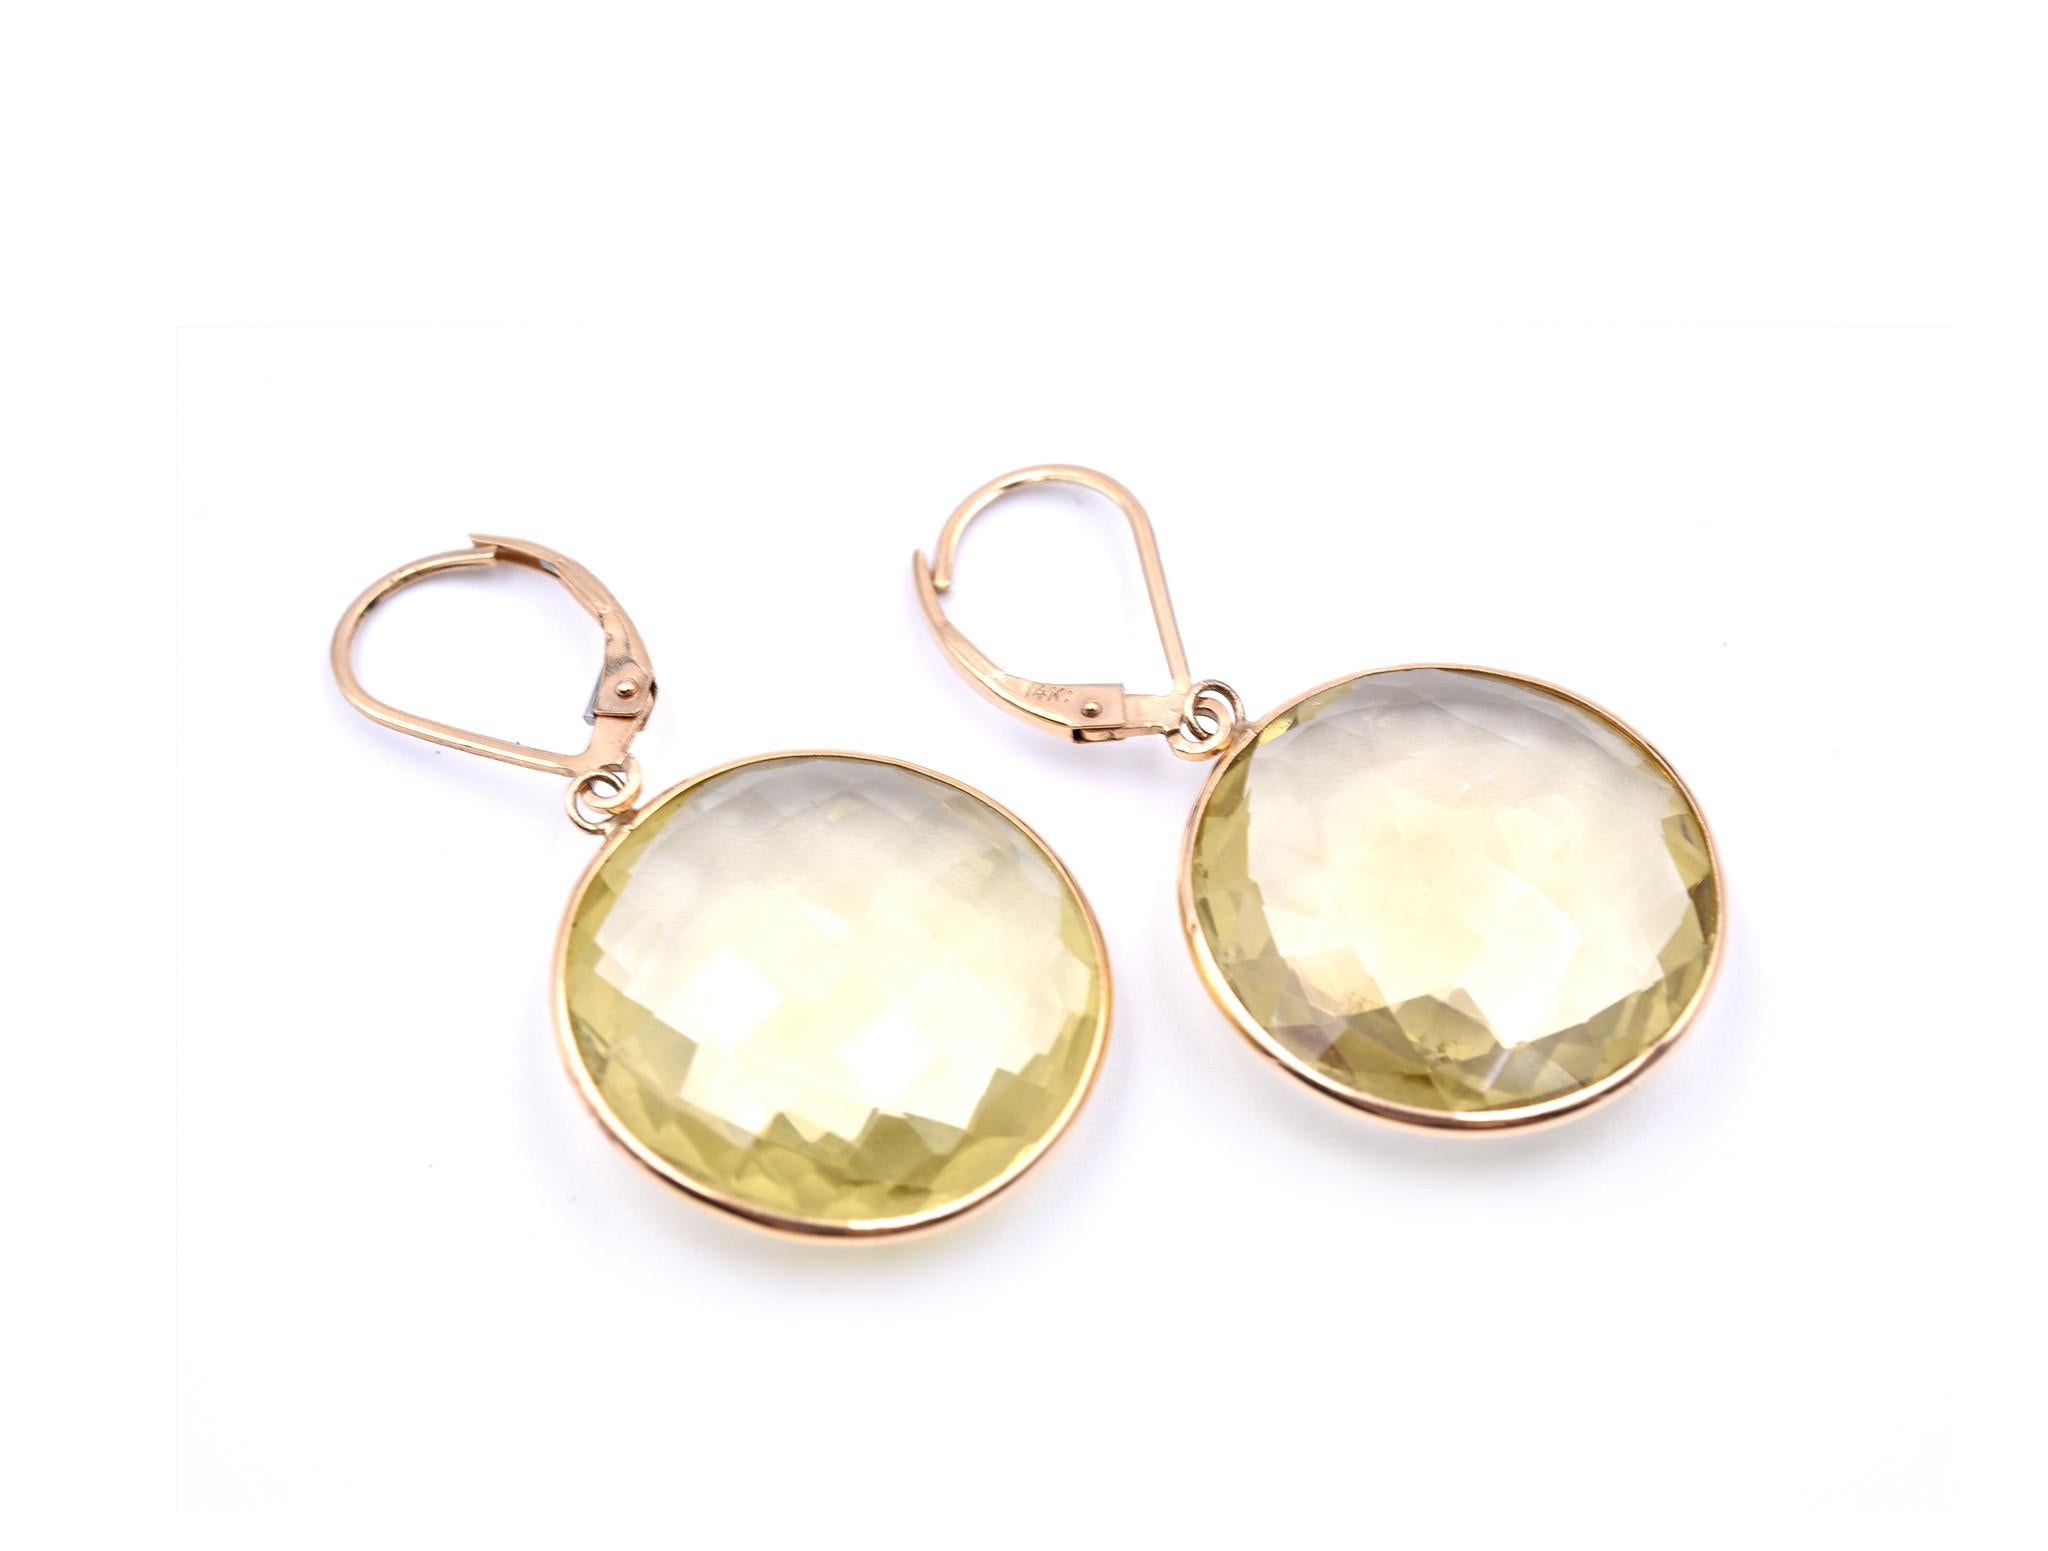 Designer: custom design
Material: 14k yellow gold
Gemstones: checkerboard cut lemon quartz
Dimensions: earrings 1 1/2-inch long, lemon quartz is 3/4-inch wide
Weight: 8.30 grams
